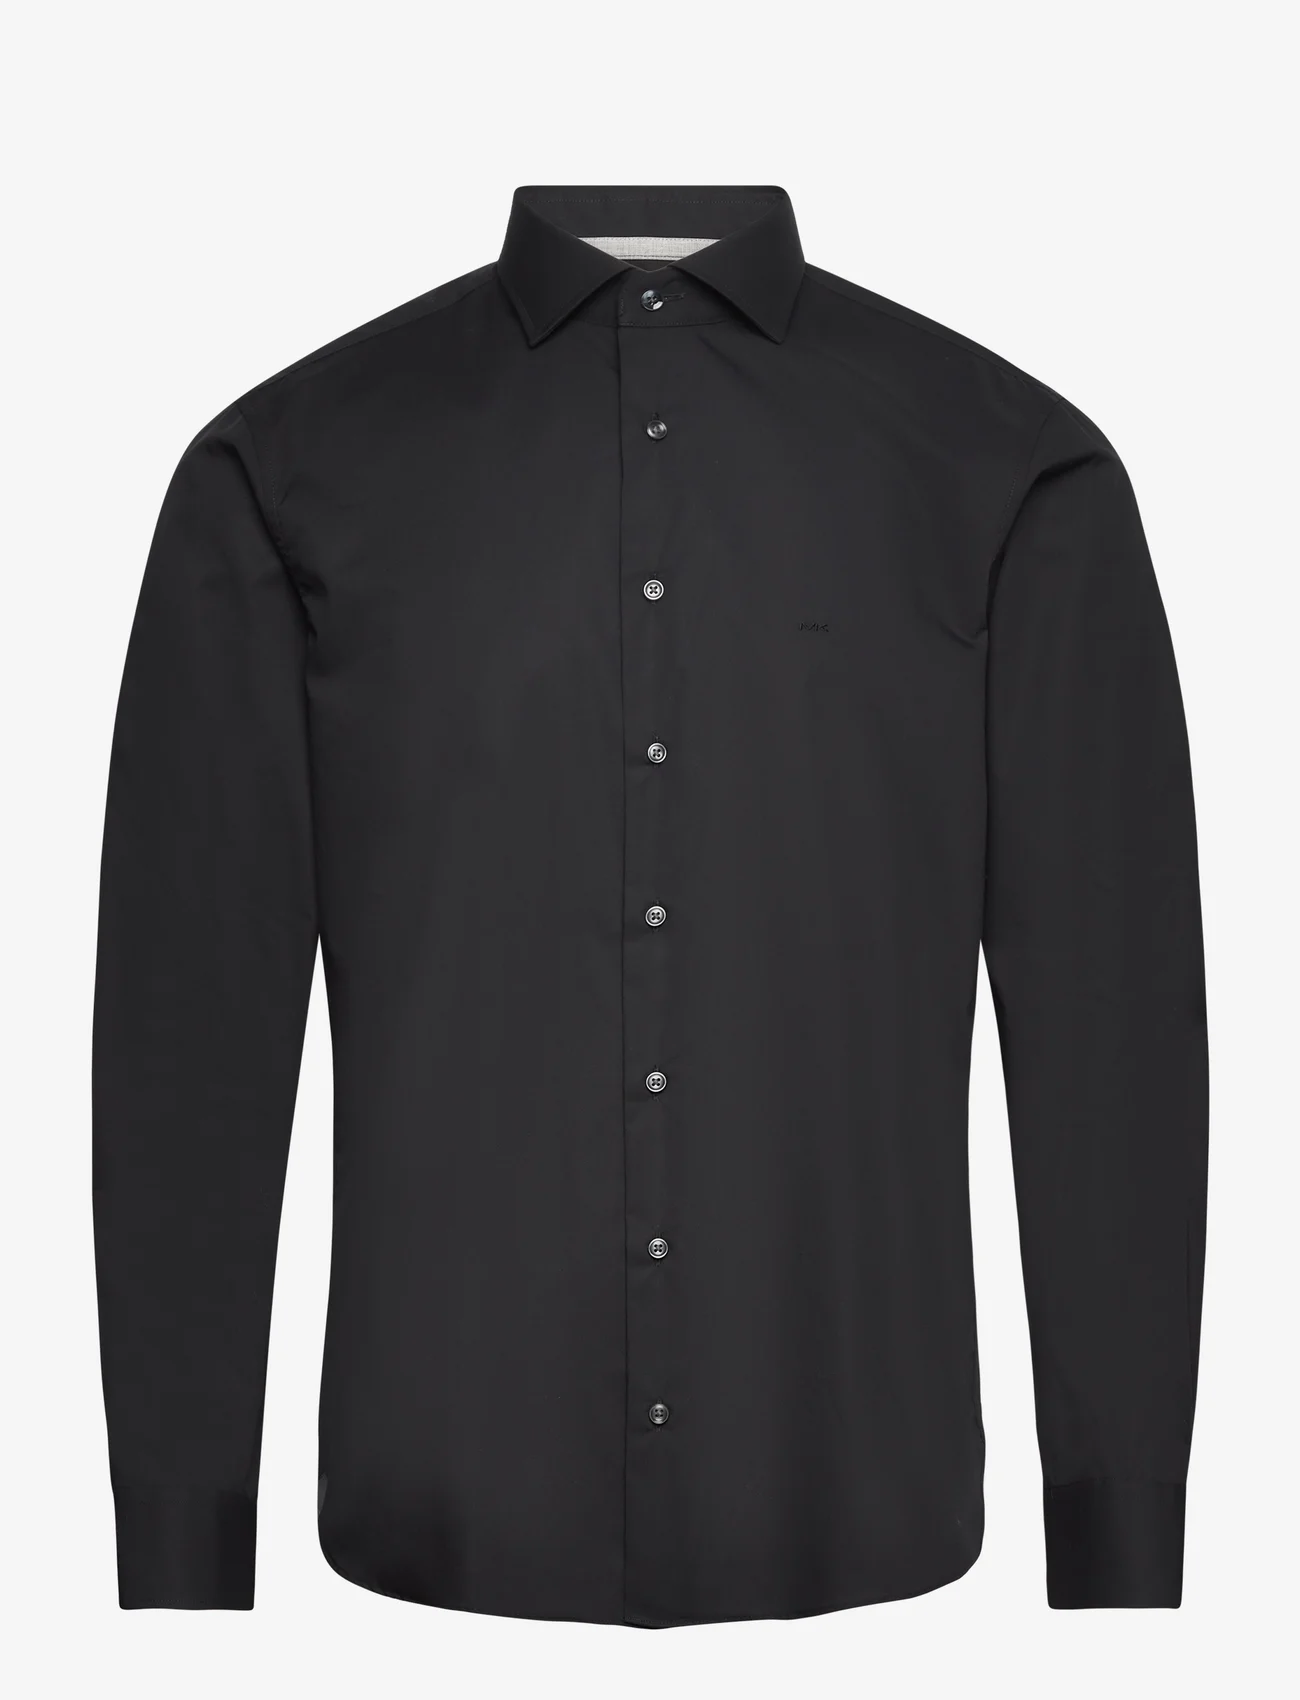 Michael Kors - POPLIN STRETCH MODERN SHIRT - basic overhemden - black - 0